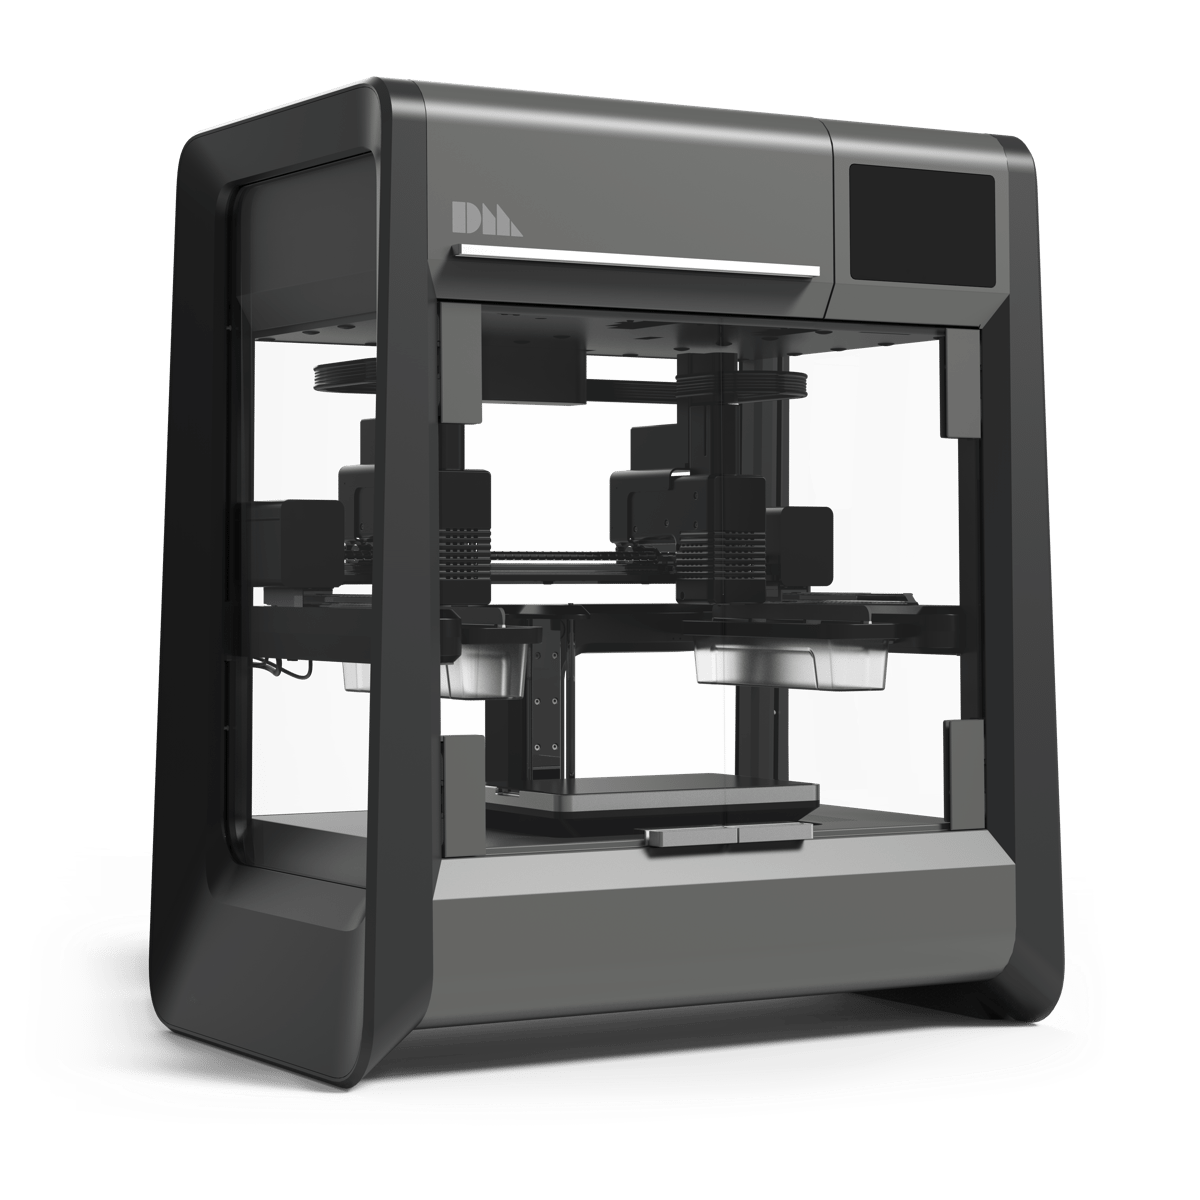 Additive Manufacturing Services - Metal 3D Printer